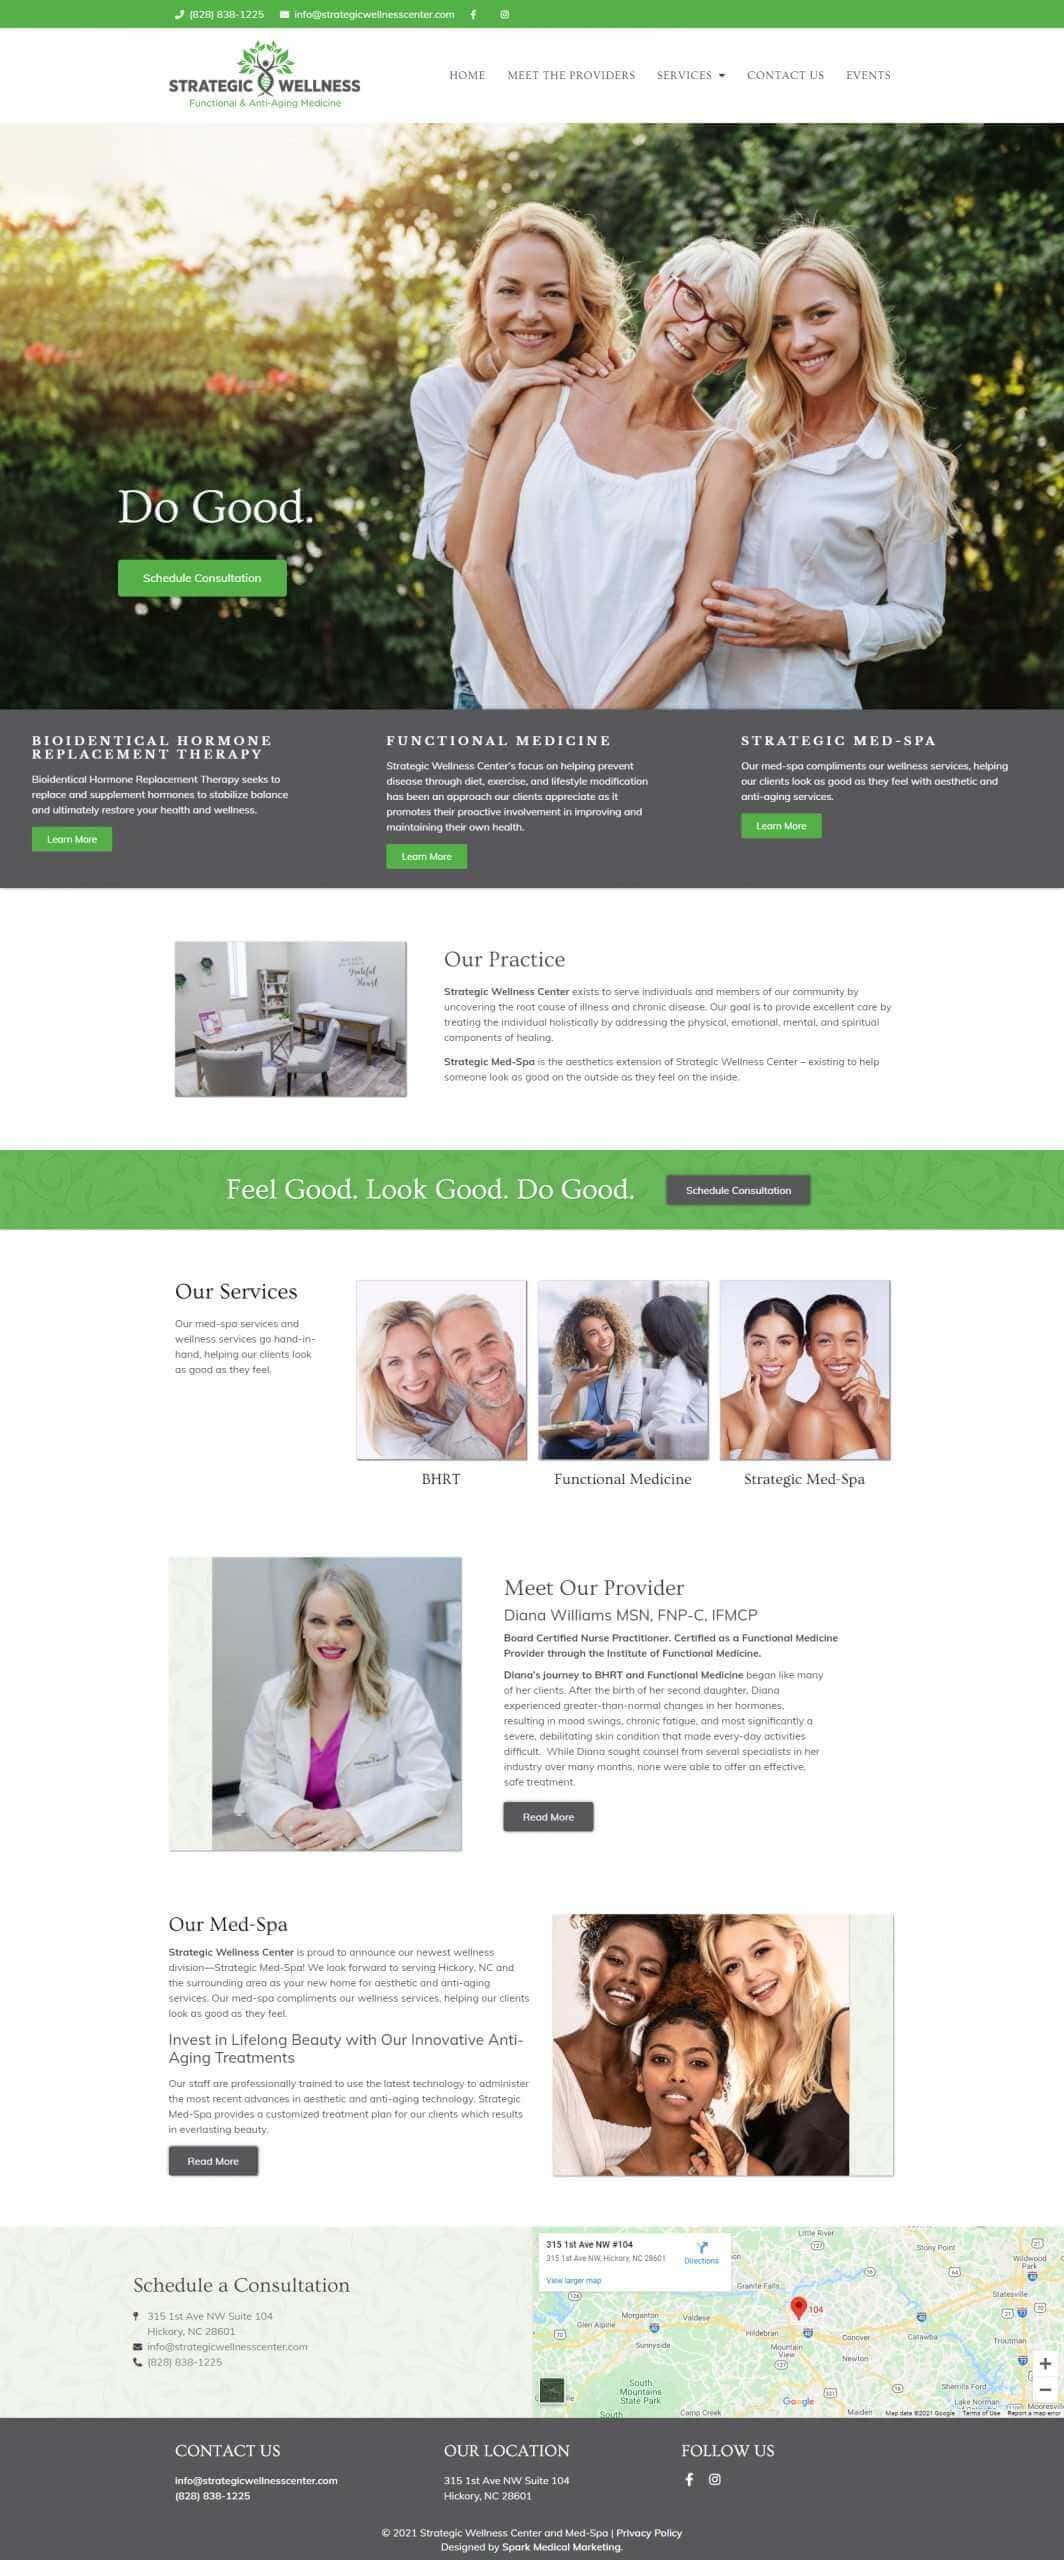 Strategic Wellness Center and Med-Spa Homepage Screenshot